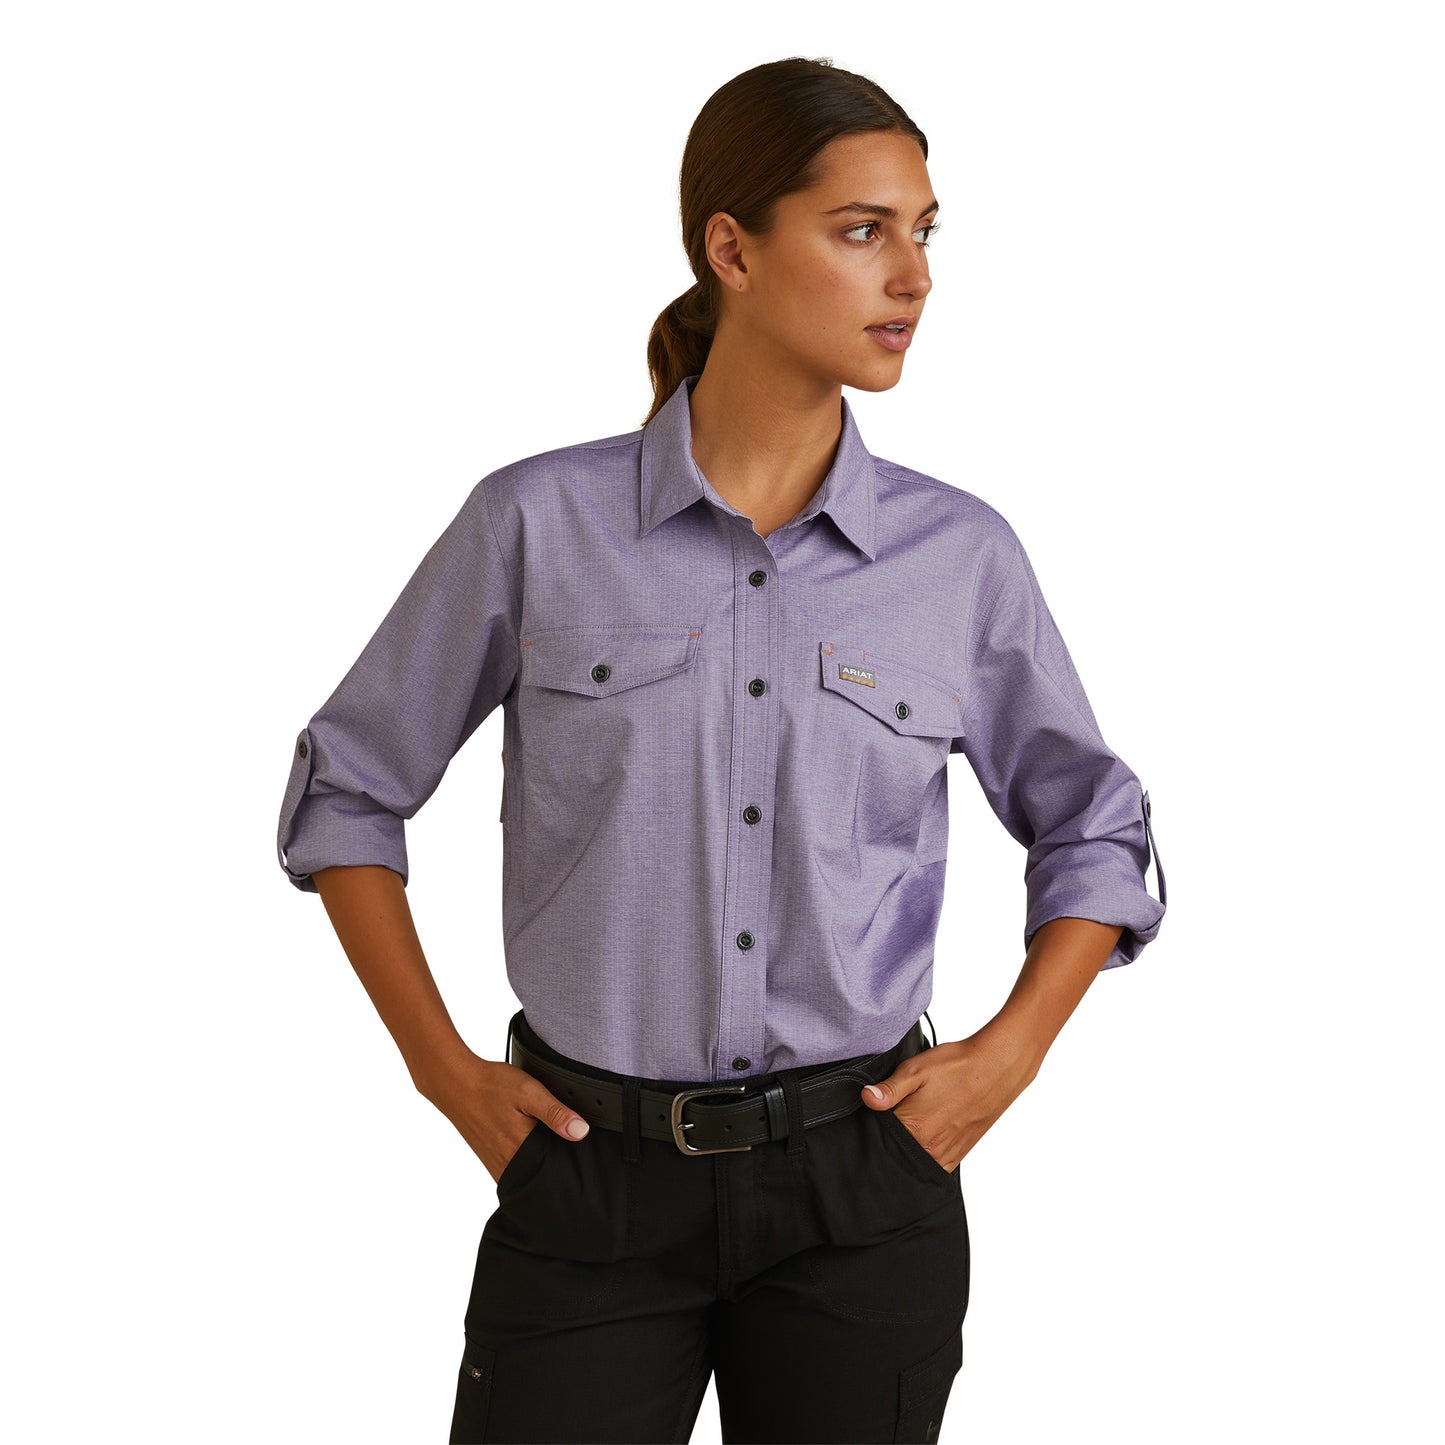 Ariat® Ladies Rebar Made Tough VentTEK DuraStretch™ Purple Shirt 10043563